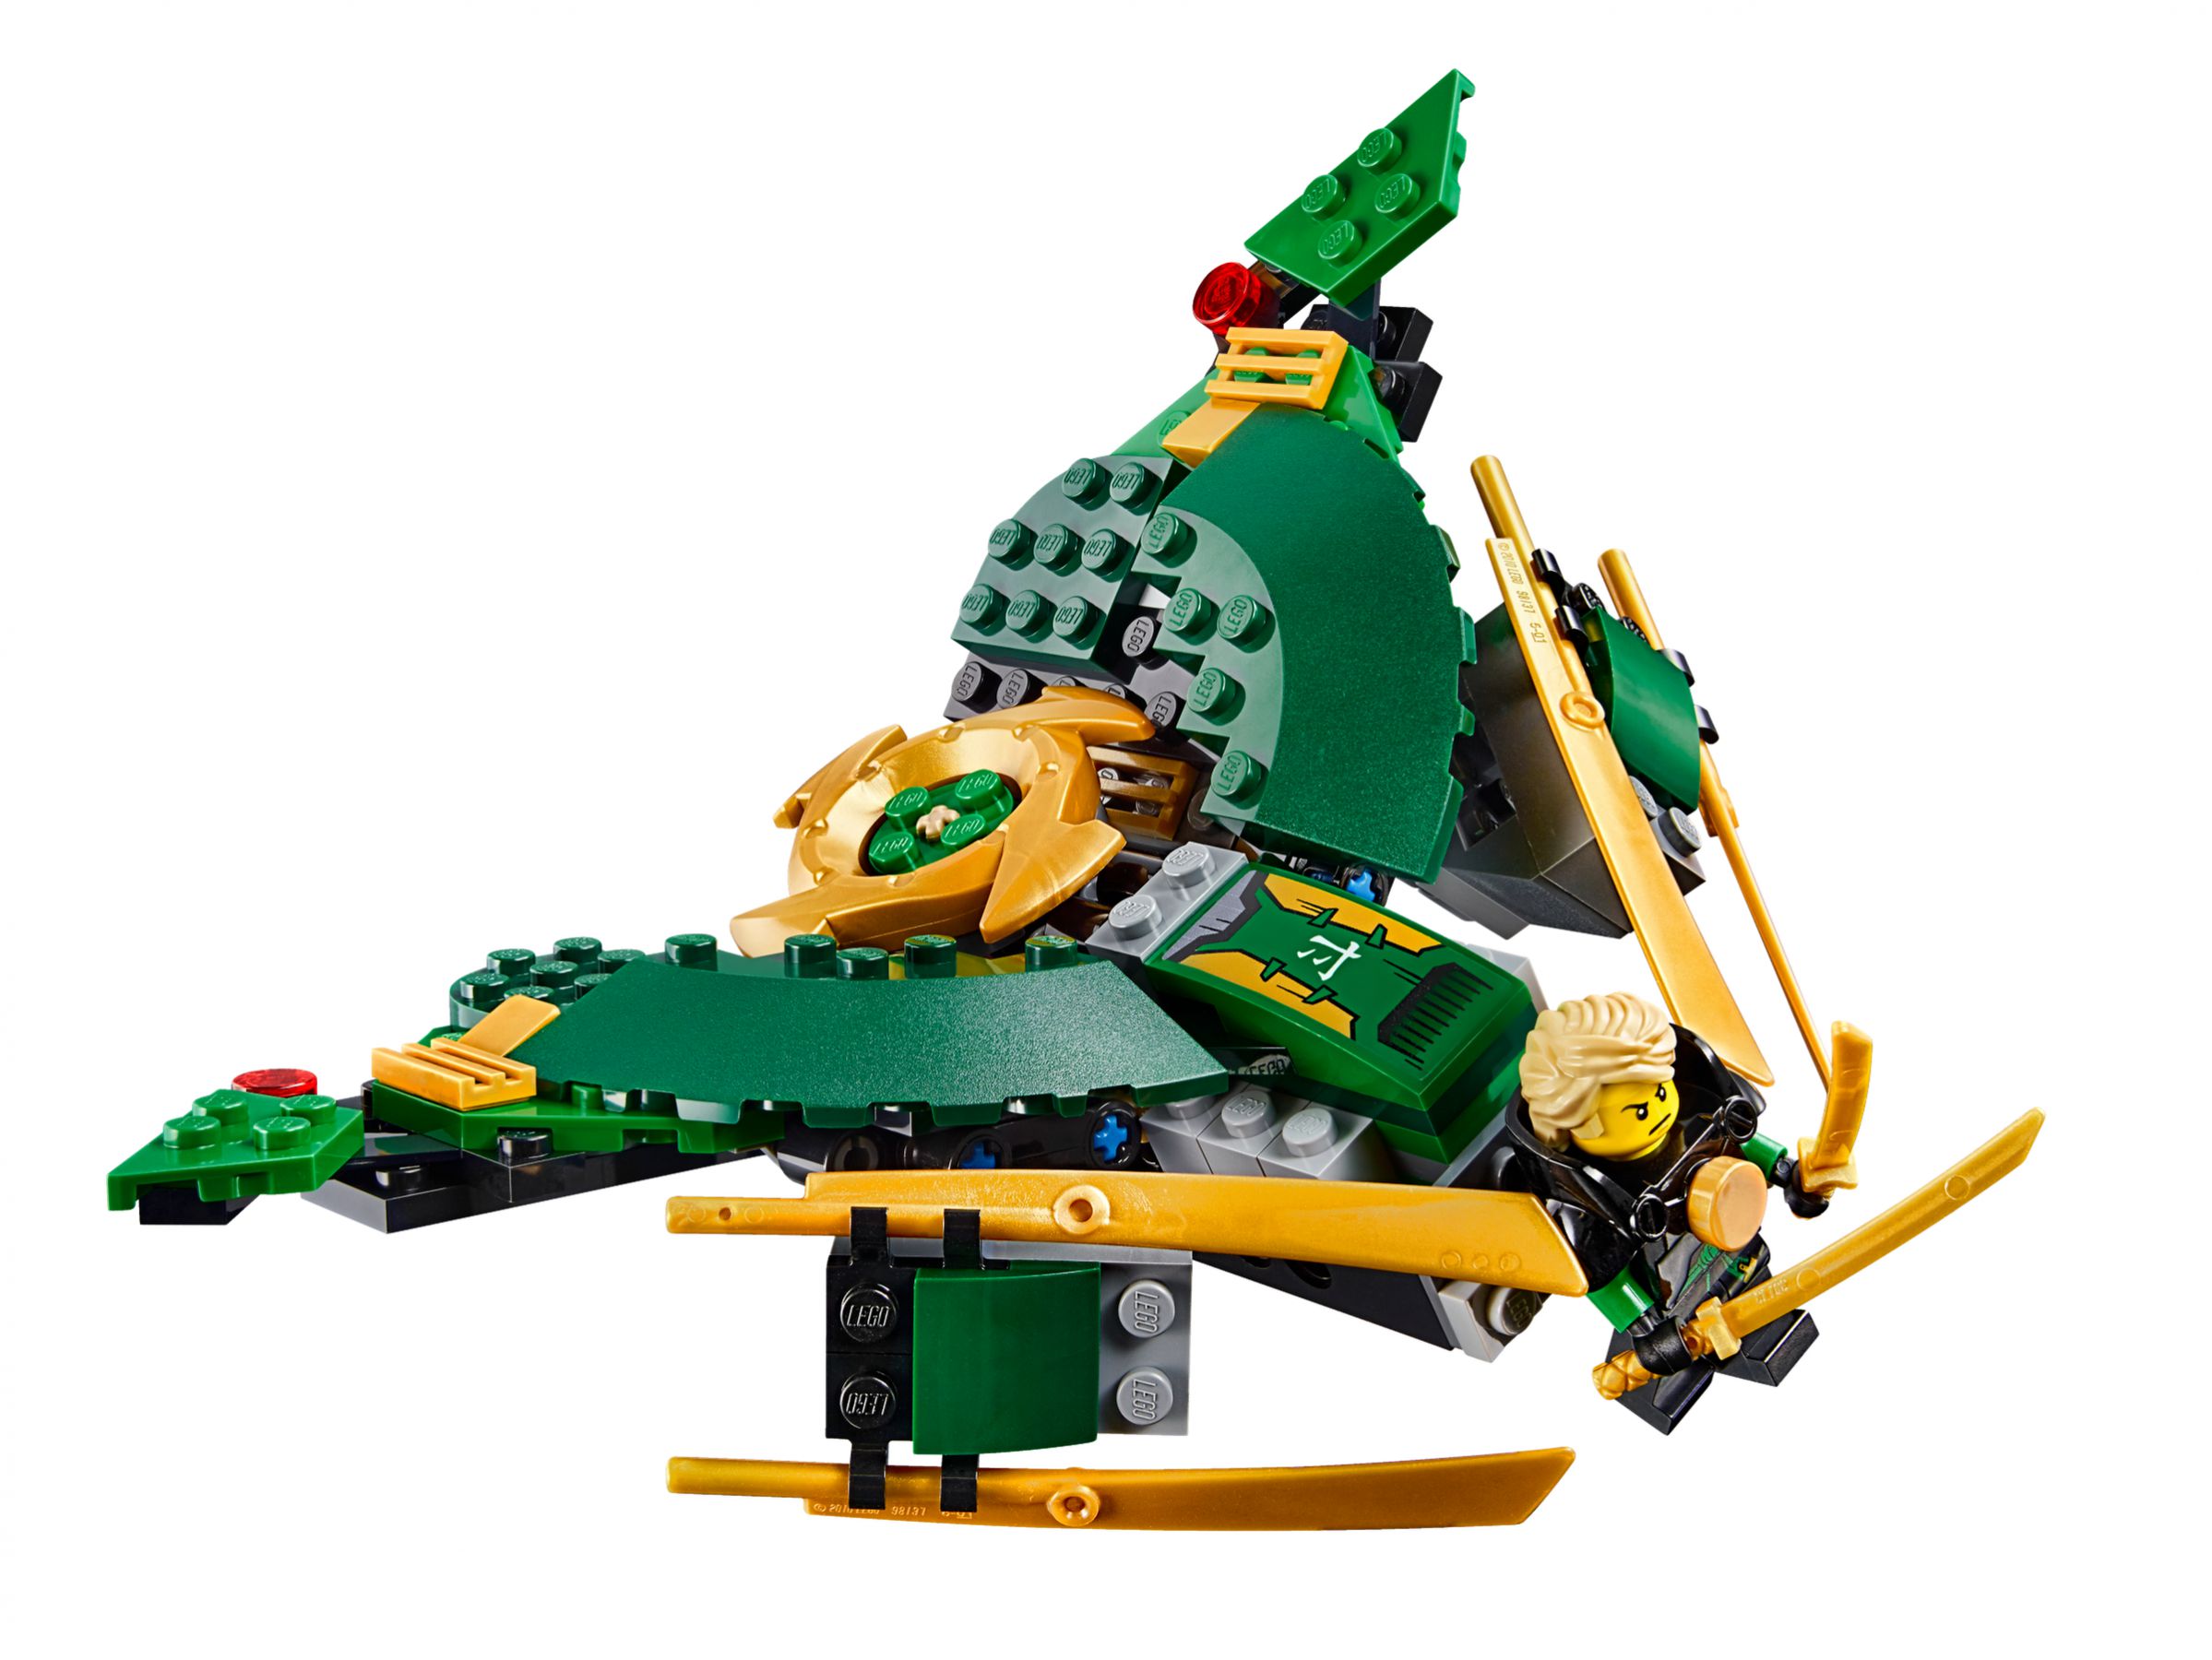 LEGO Ninjago 70605 Luftschiff des Unglücks LEGO_70605_alt9.jpg